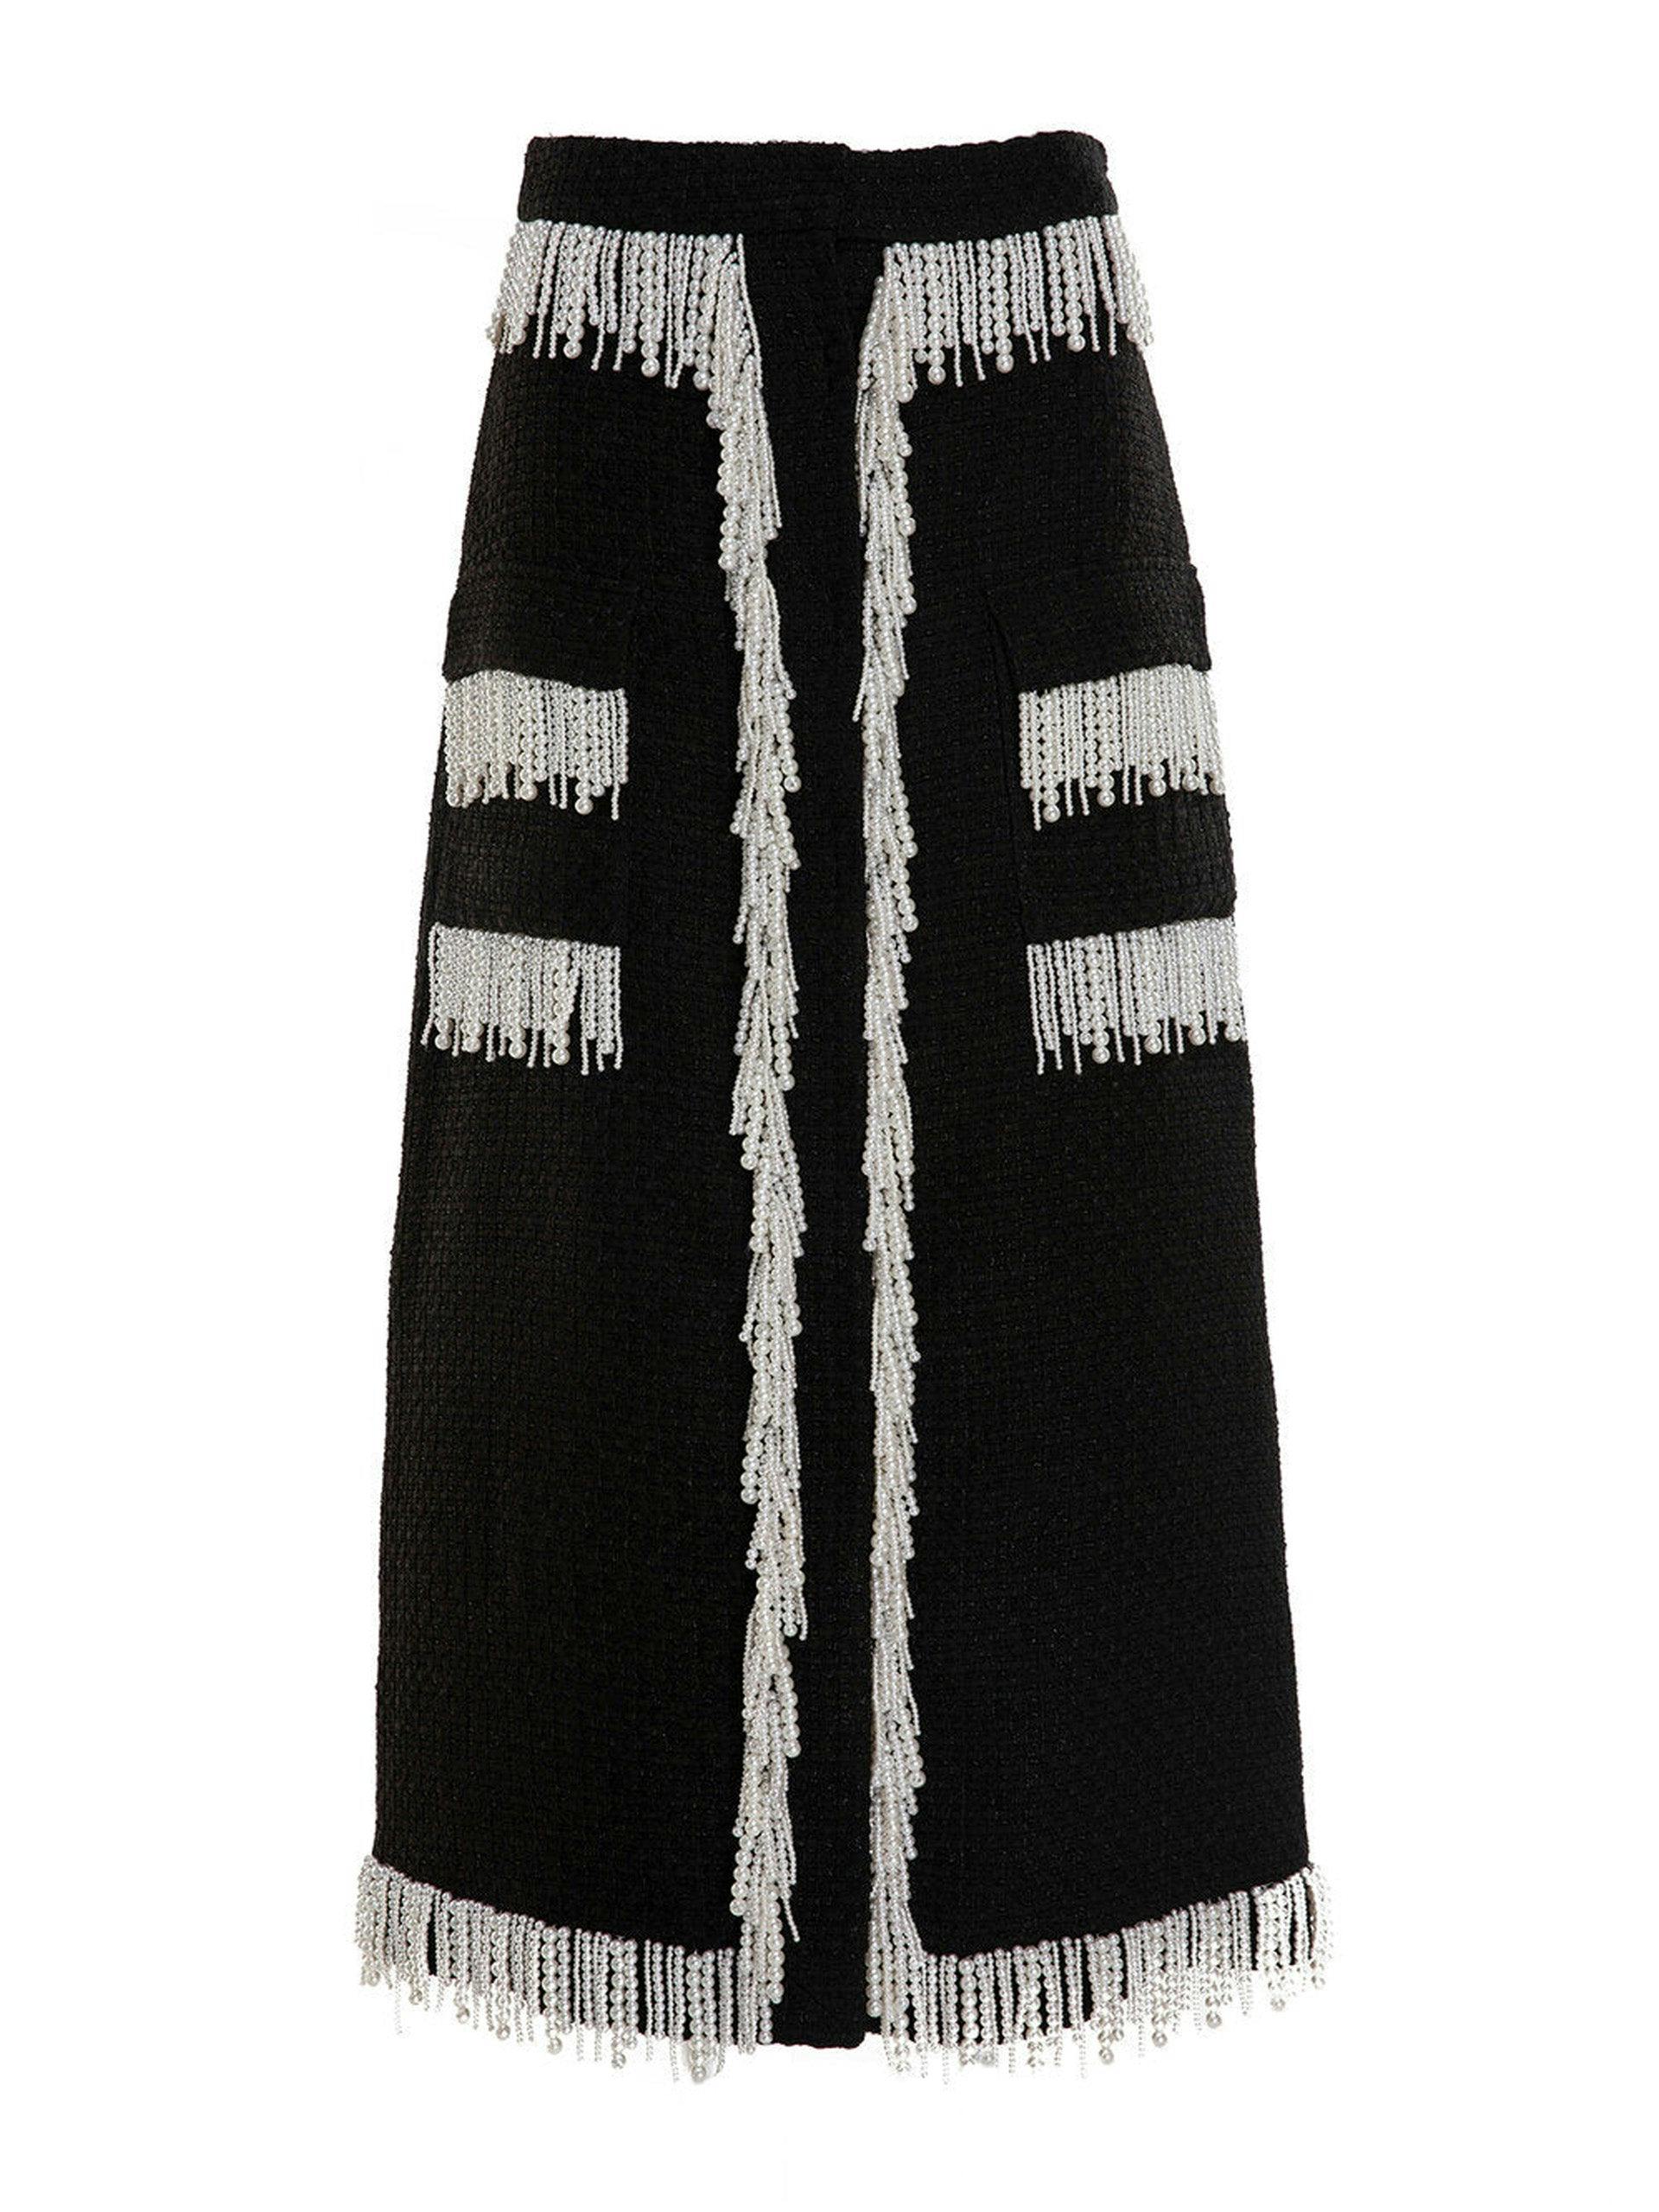 Victoria black and white tweed skirt